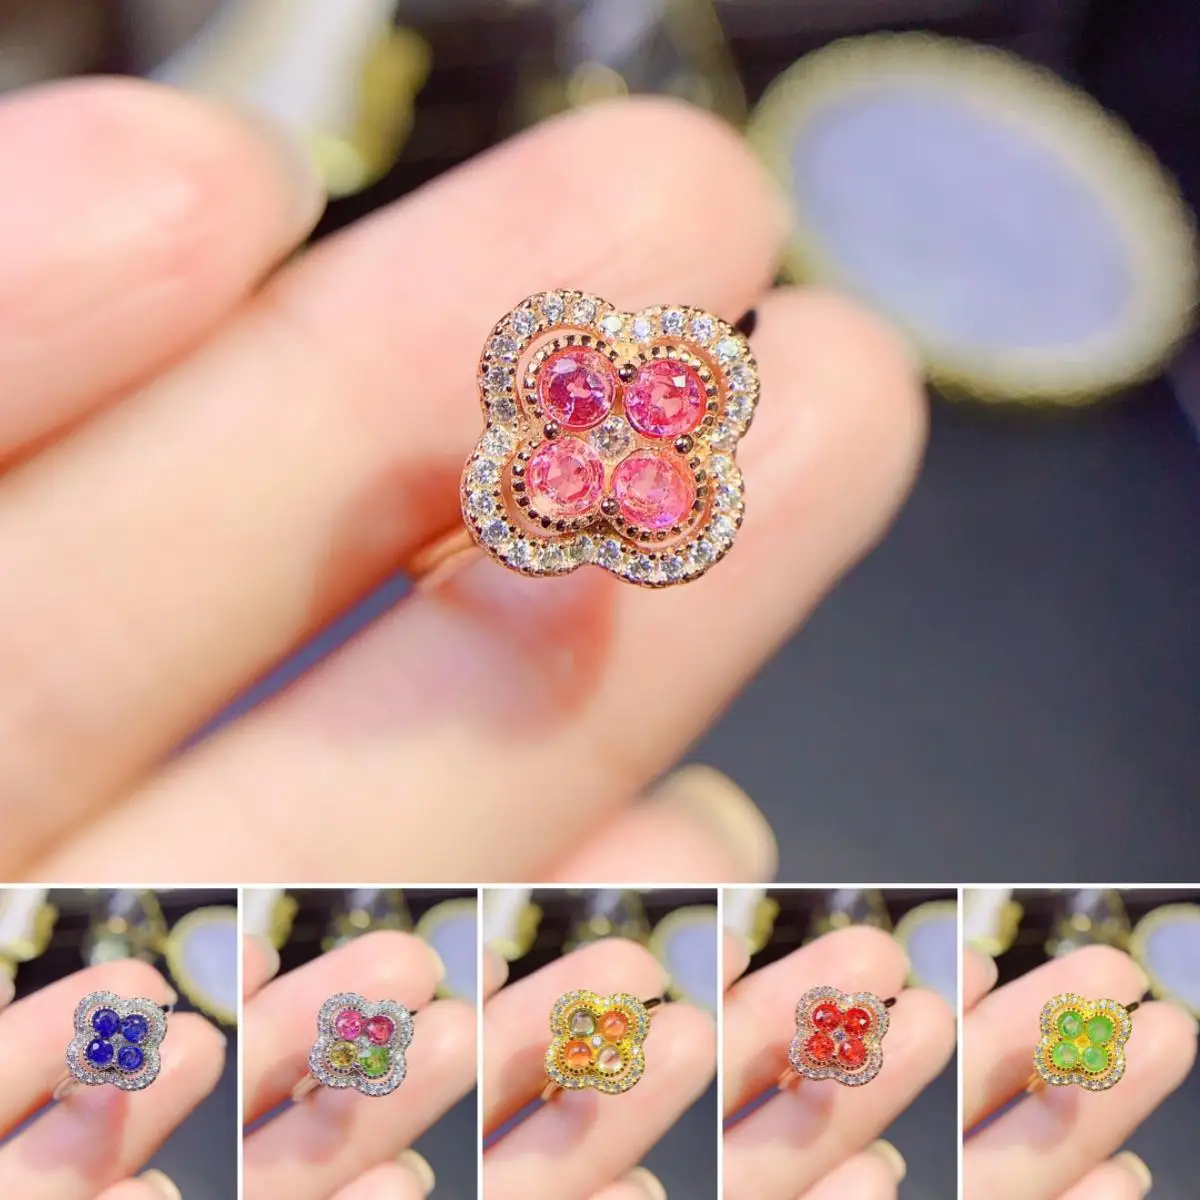 

FS Natural Ruby/Sapphire/Emerald/Tourmaline Flower Ring S925 Sterling Silver for Women Fine Fashion Weddings Jewelry New MeiBaPJ